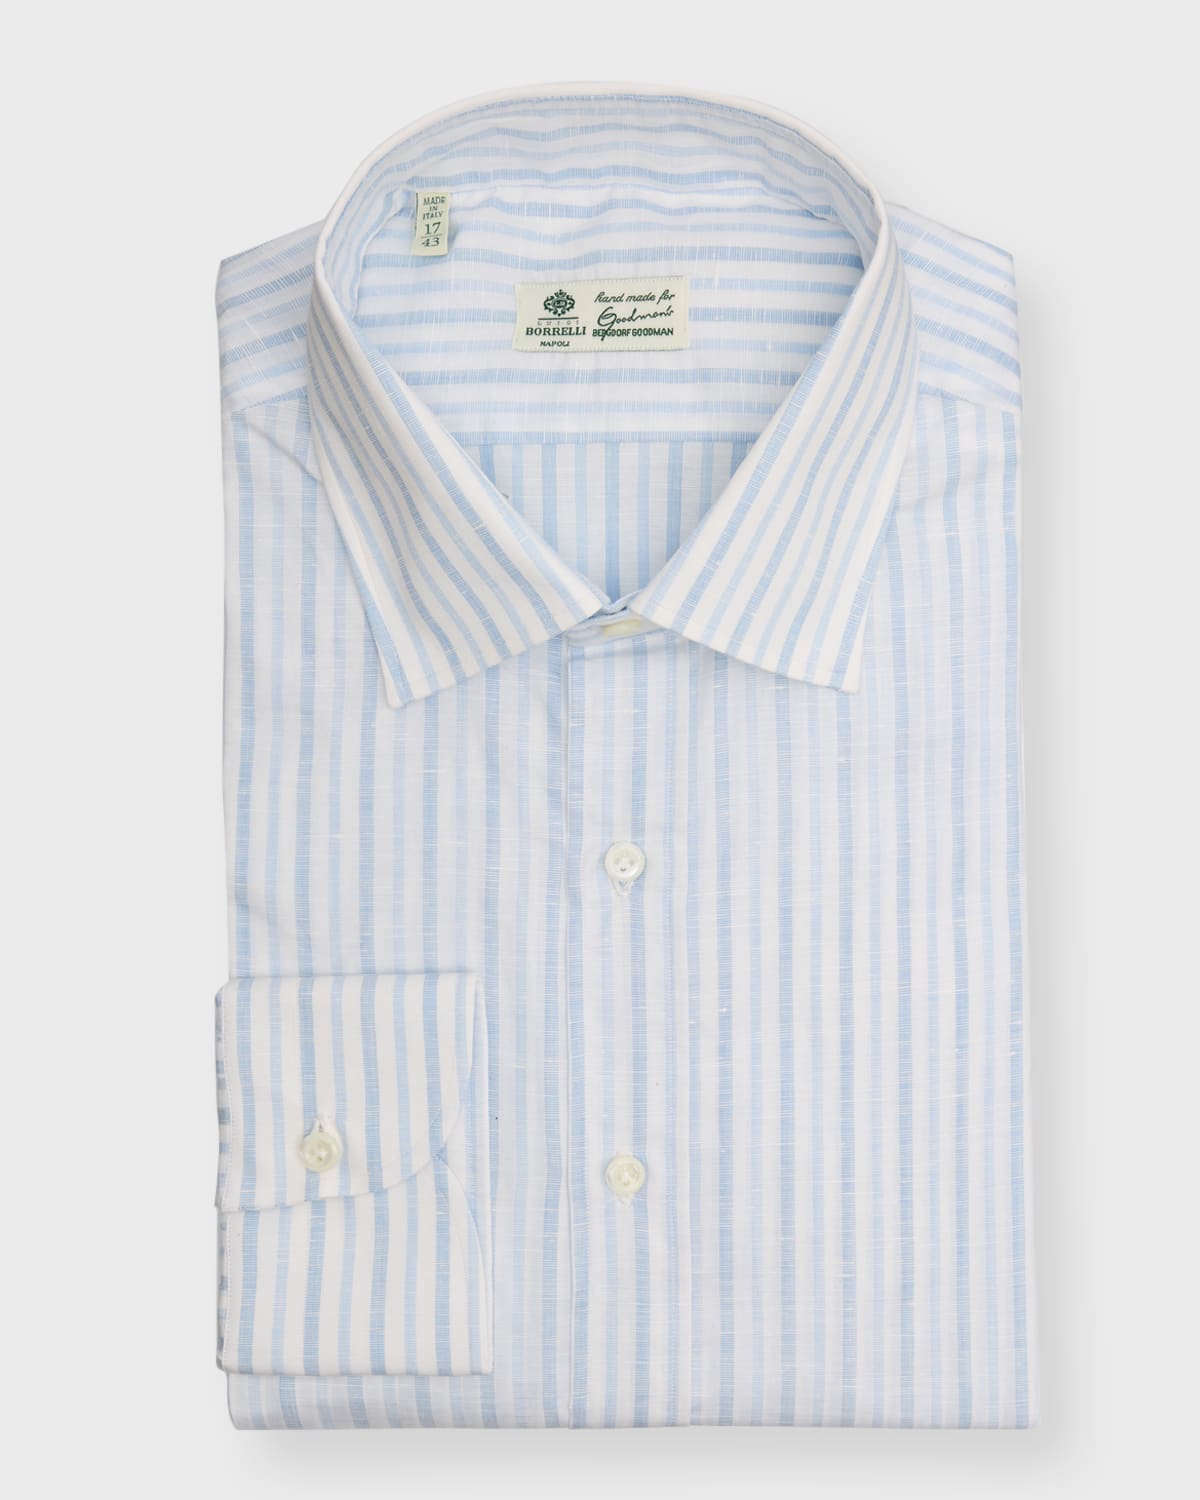 Borrelli Men's Cotton Stripe Dress Shirt In 22 Blue White Yel